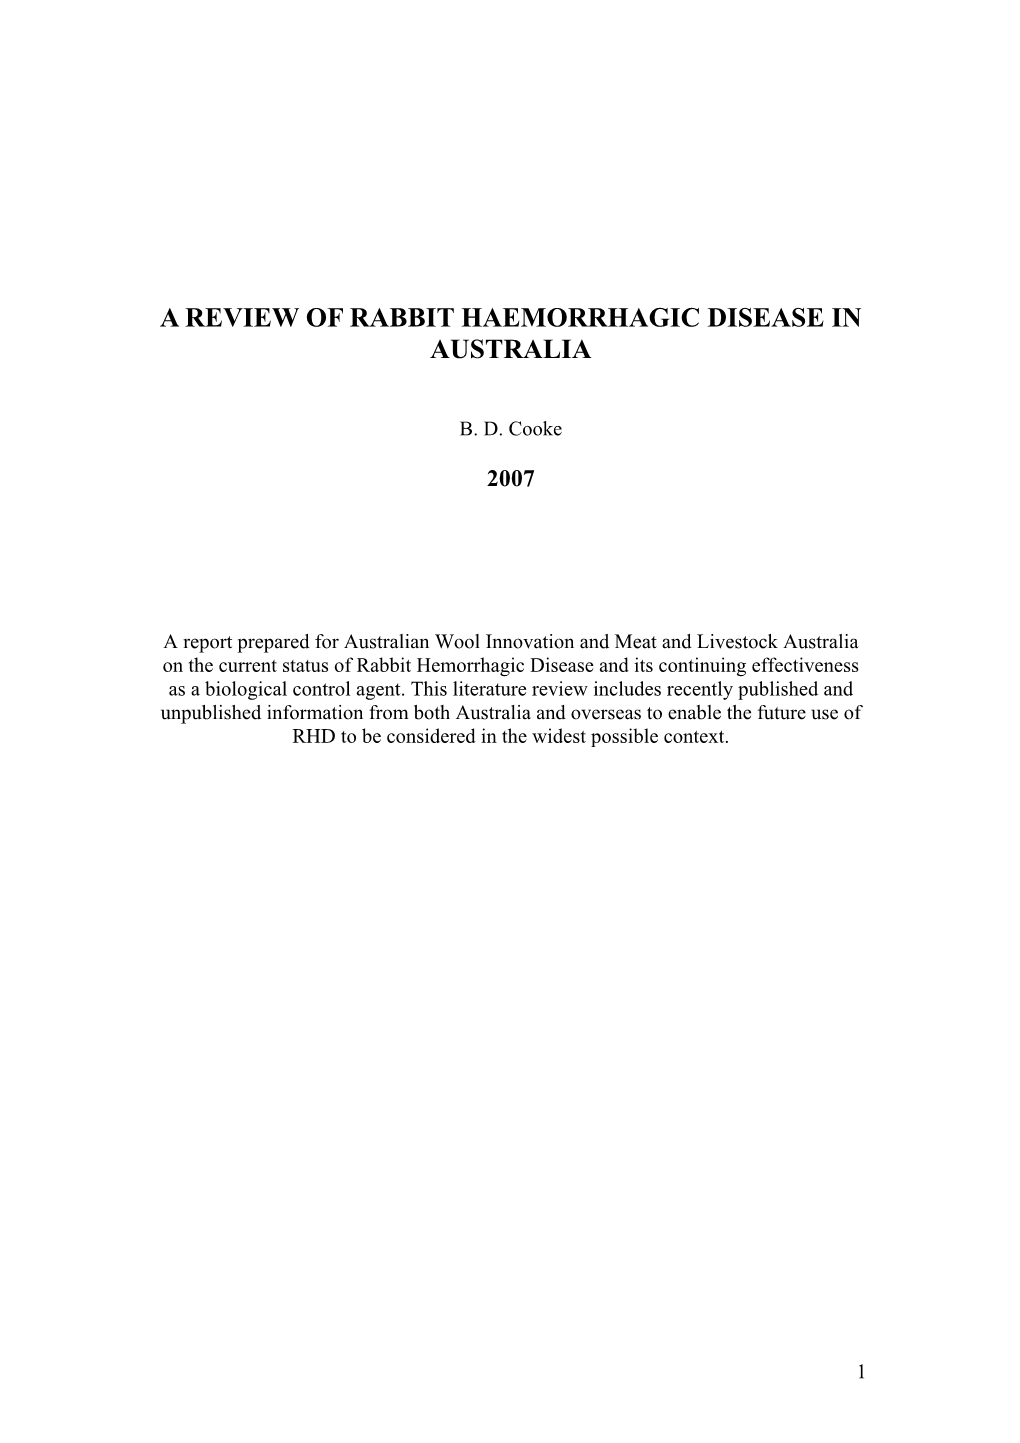 A Review of Rabbit Haemorrhagic Disease in Australia